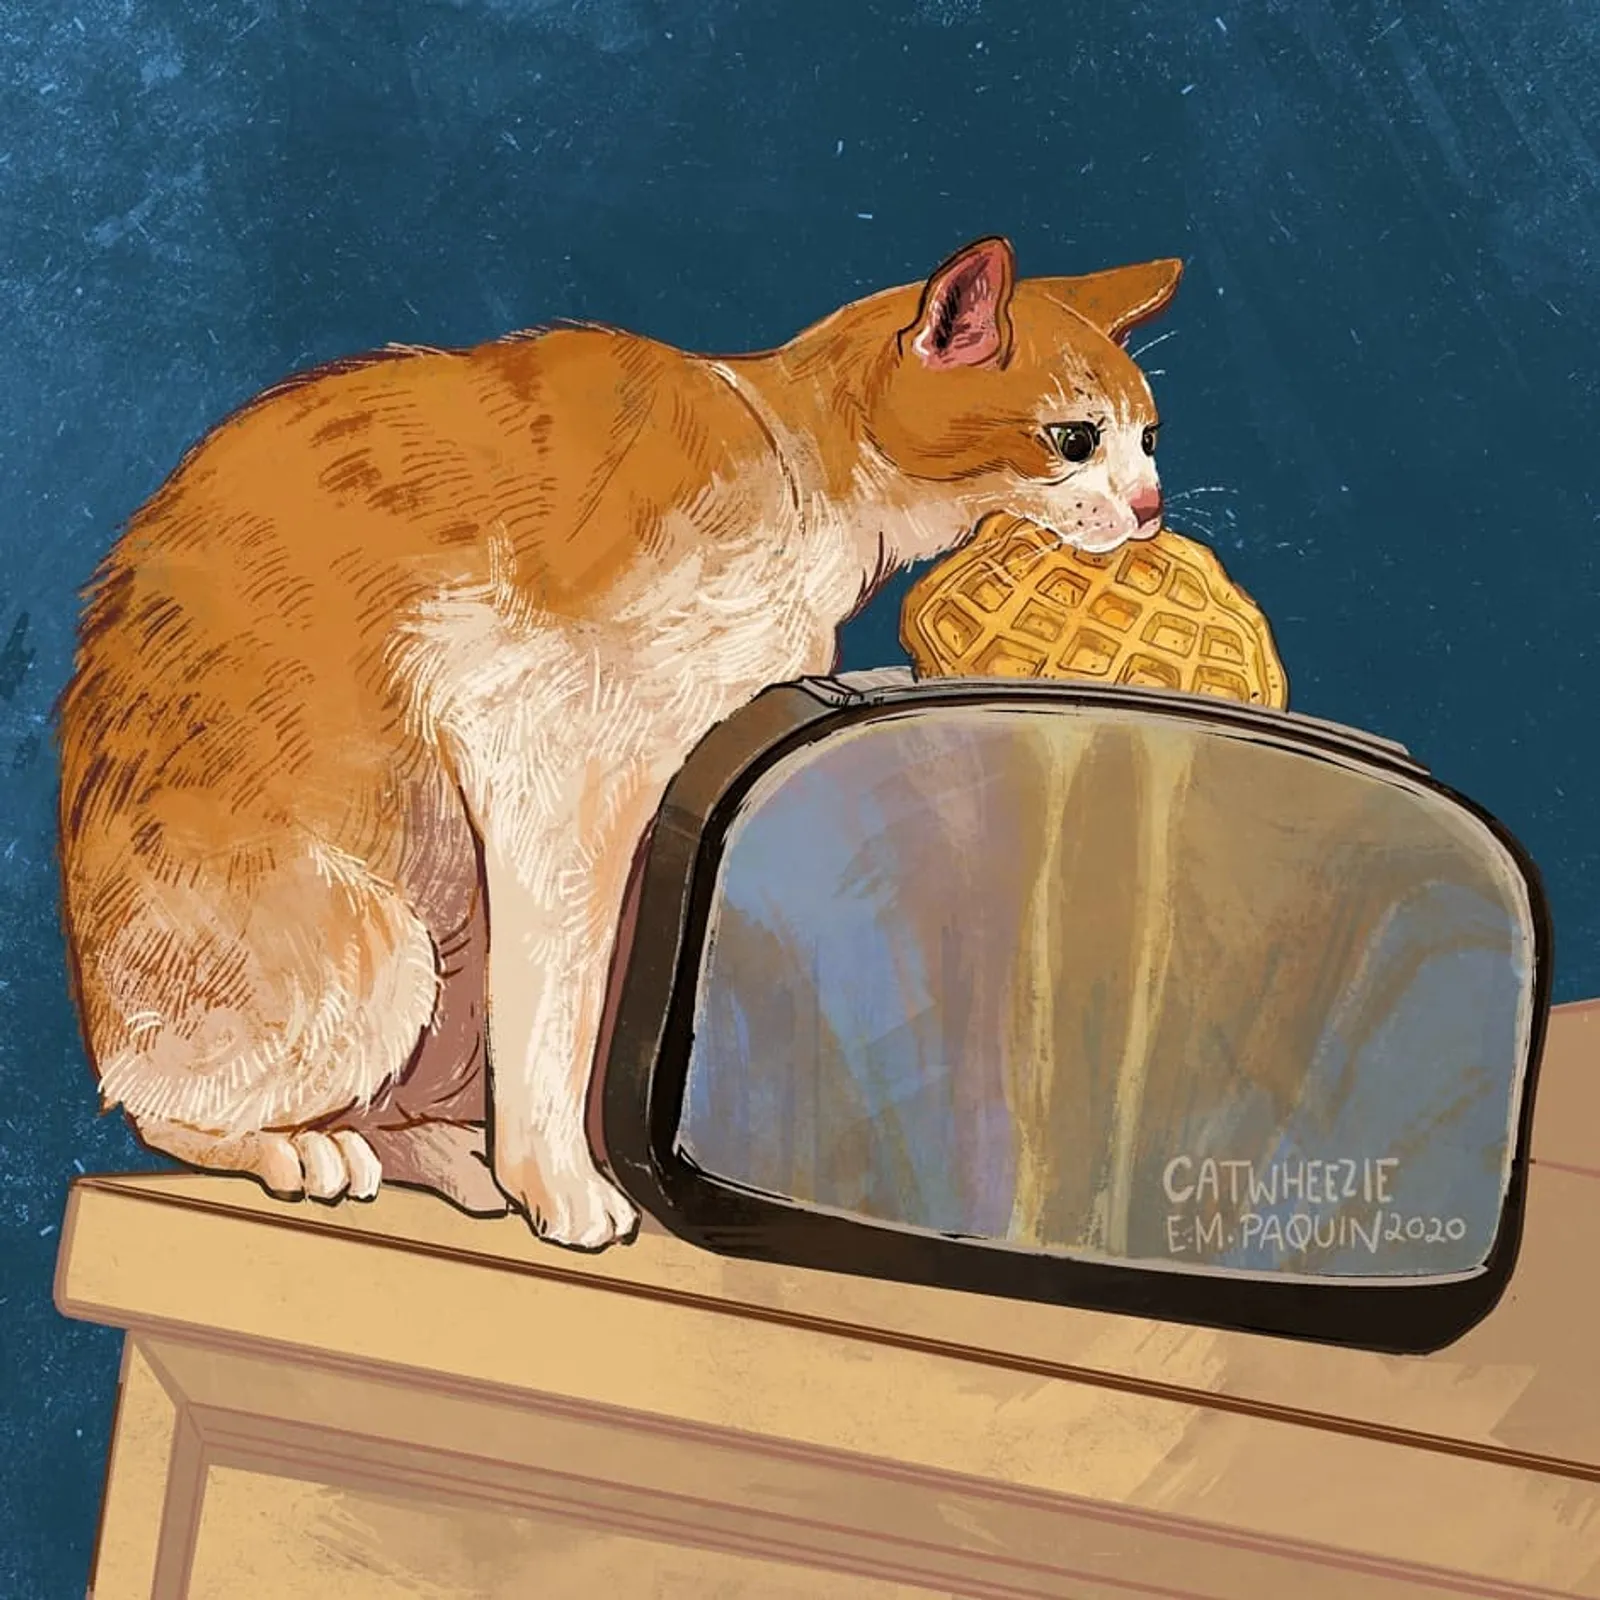 100 Days Challenge Drawing Meme Kucing yang Bikin Gemas